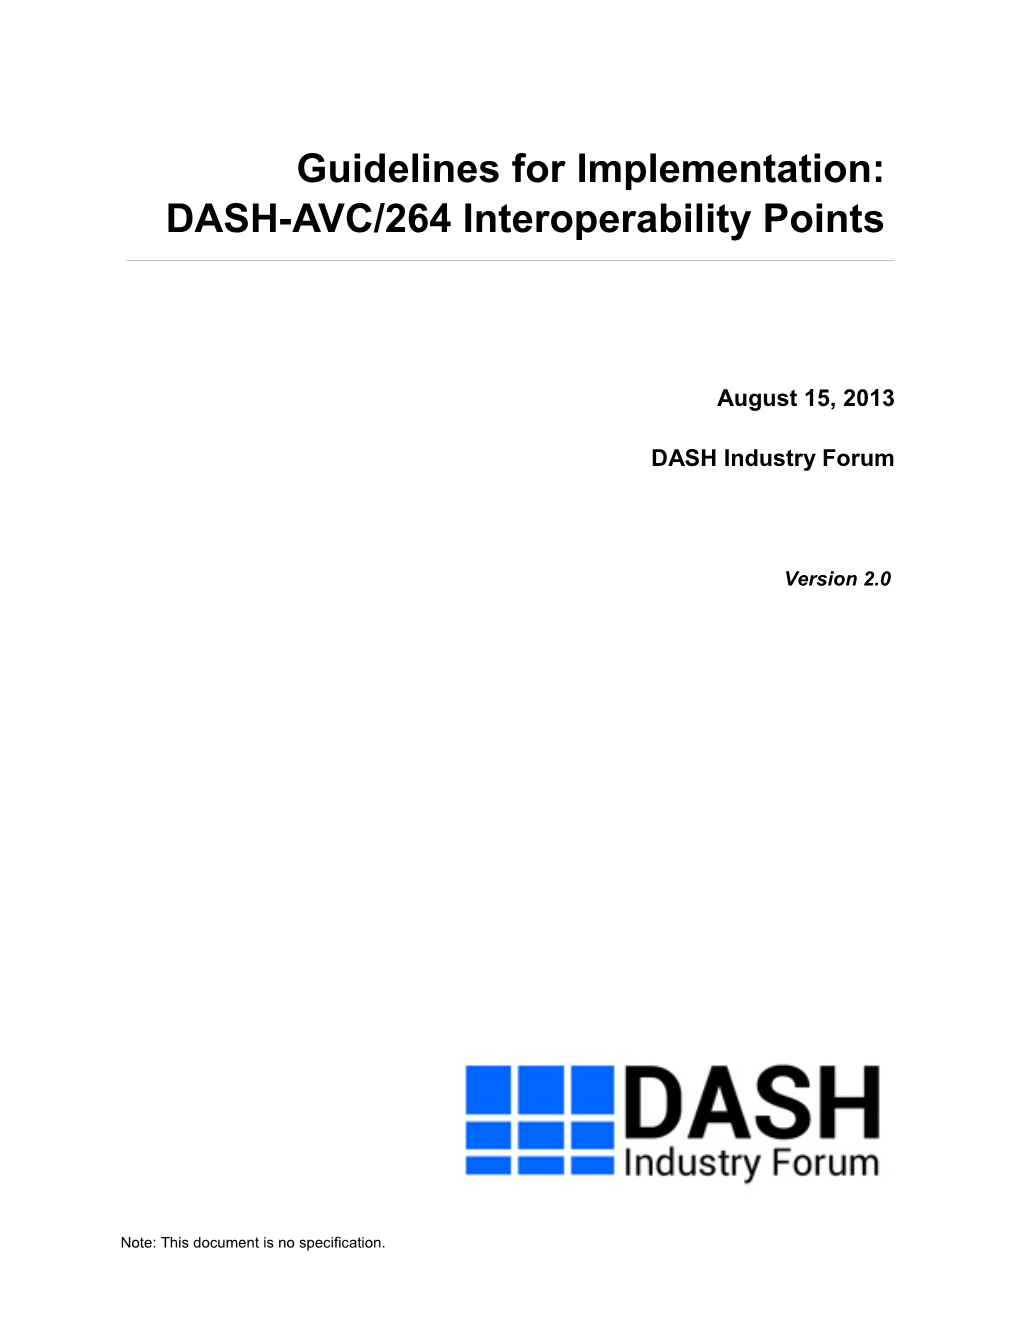 DASH-AVC/264 Interoperability Points